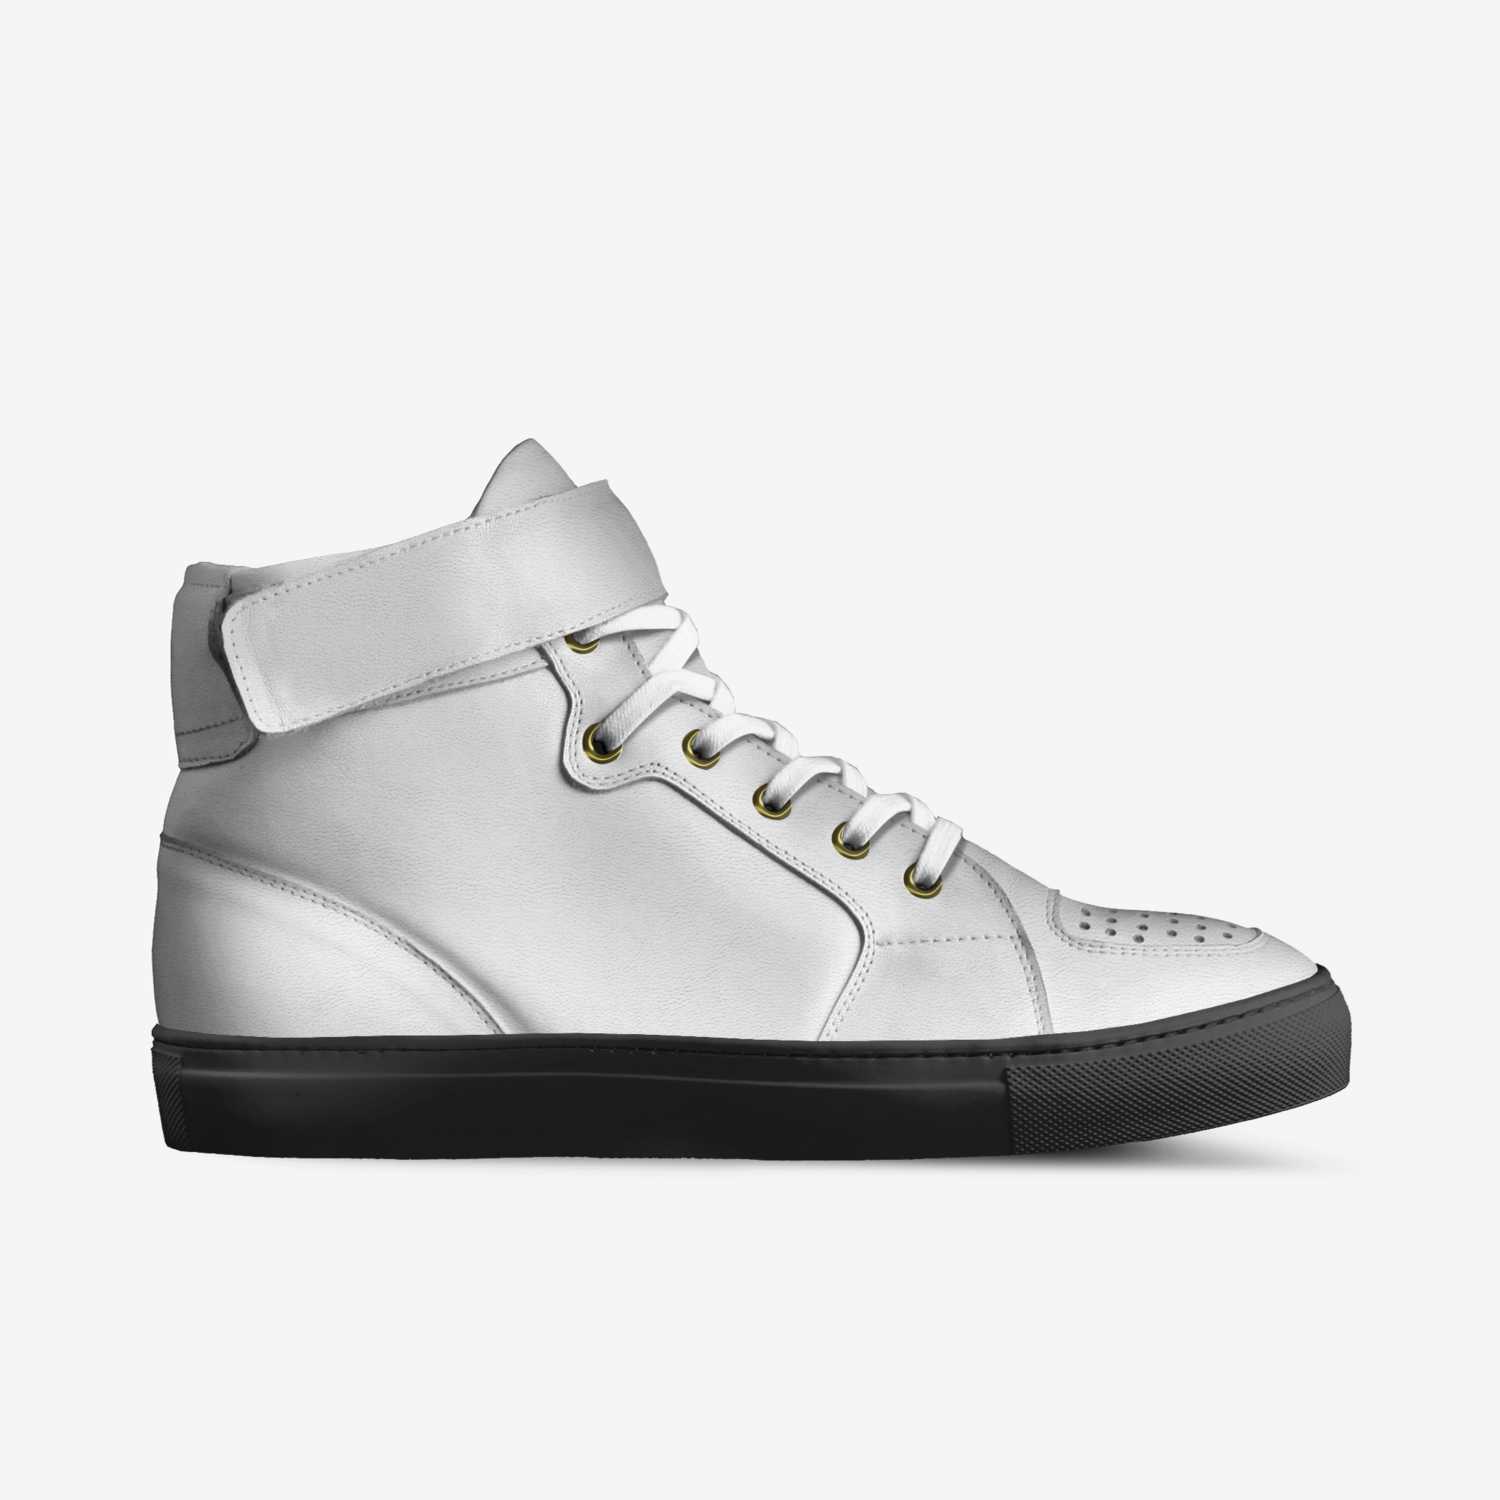 jfjh | A Custom Shoe concept by Tanner Bowen